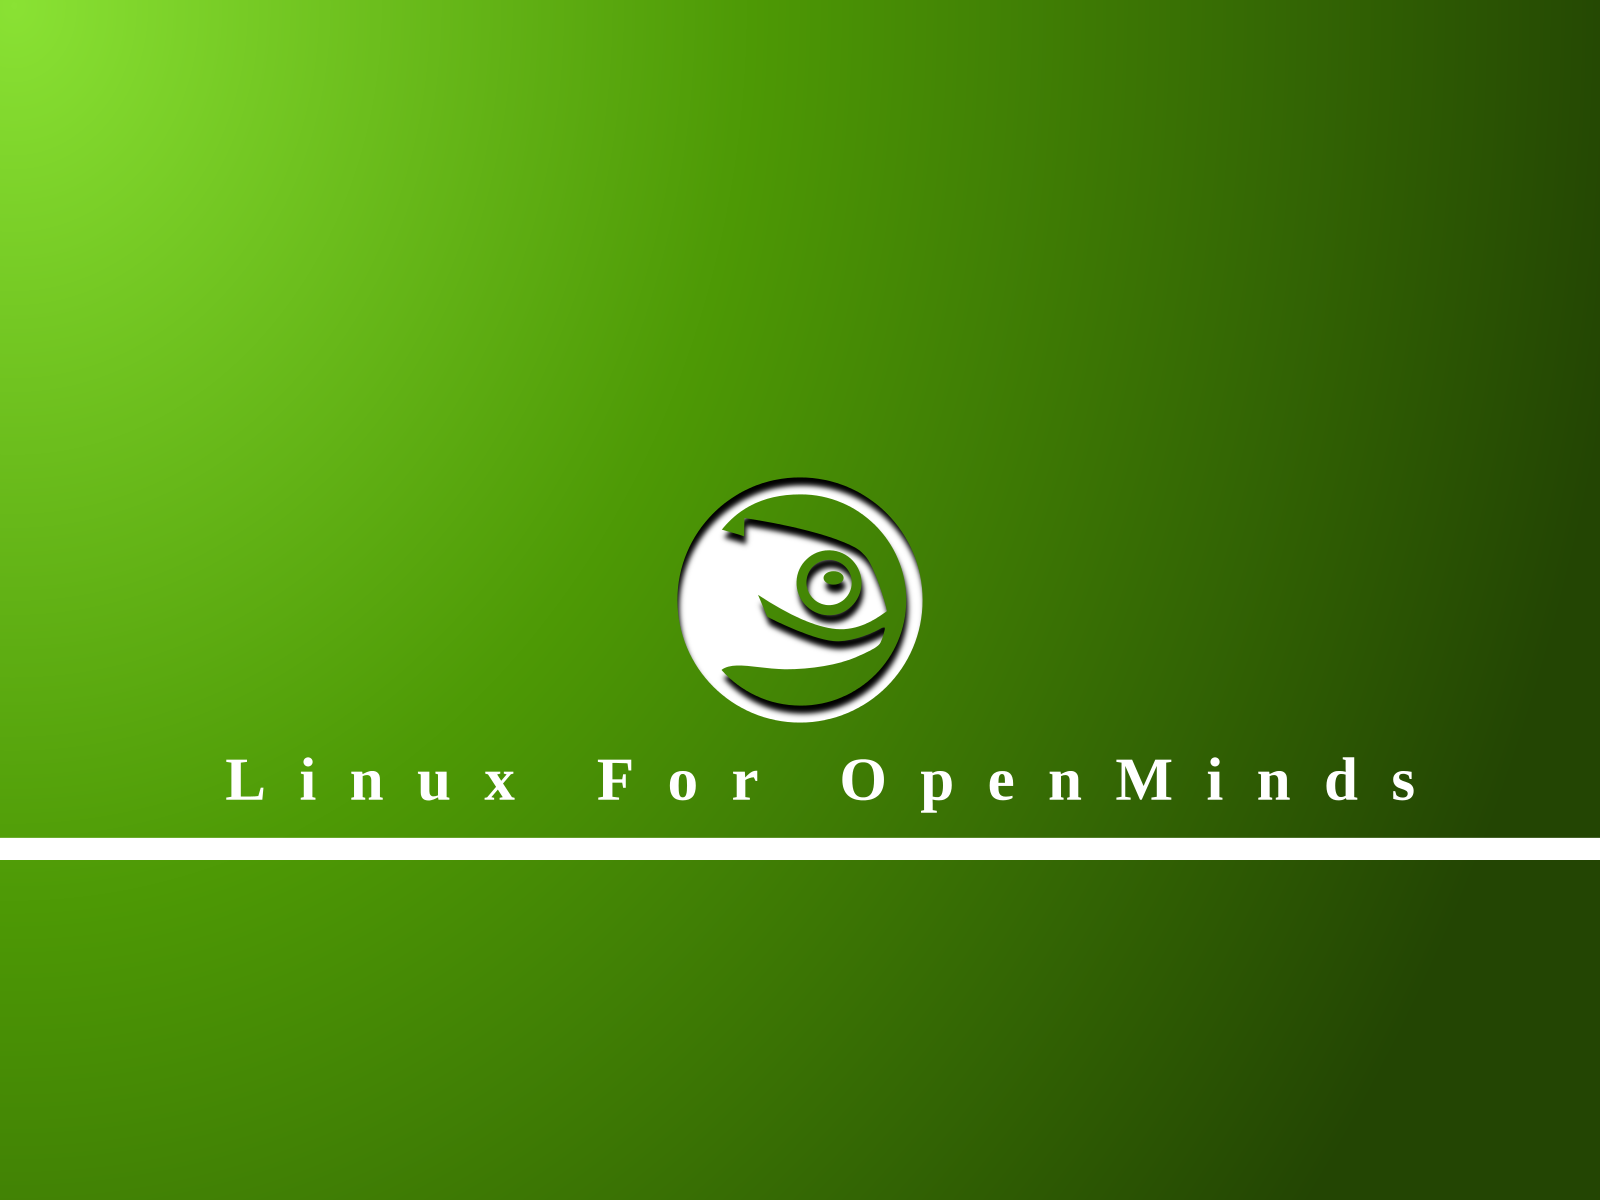 Desktop e openSUSE wallpapers | J.Roberto's blog